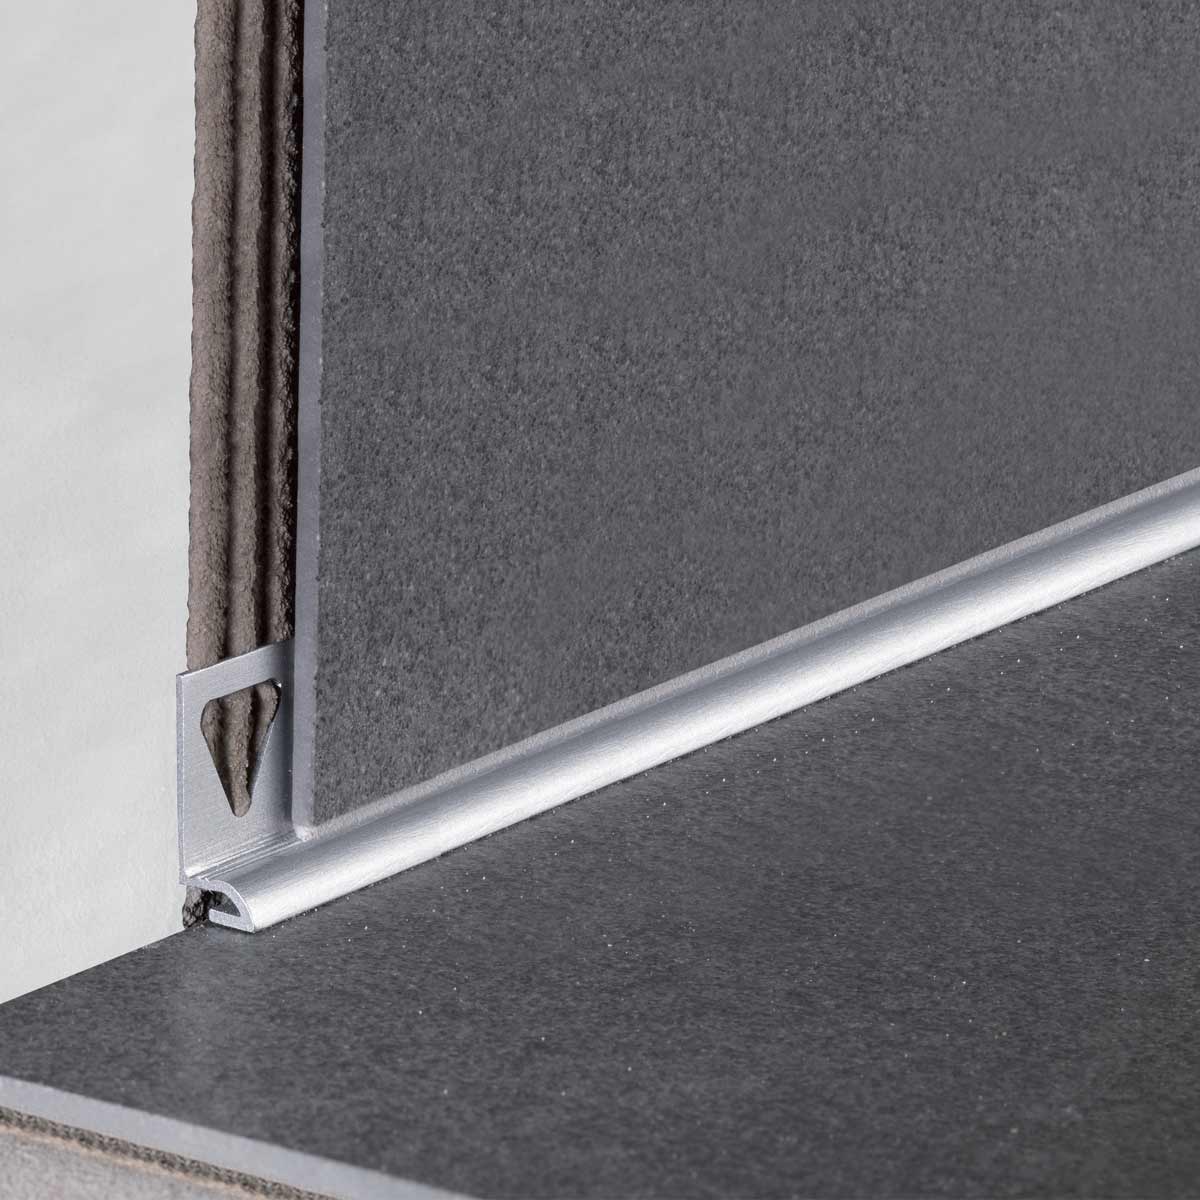 BT SKIRTING BOARD low thickness aluminium skirting profile